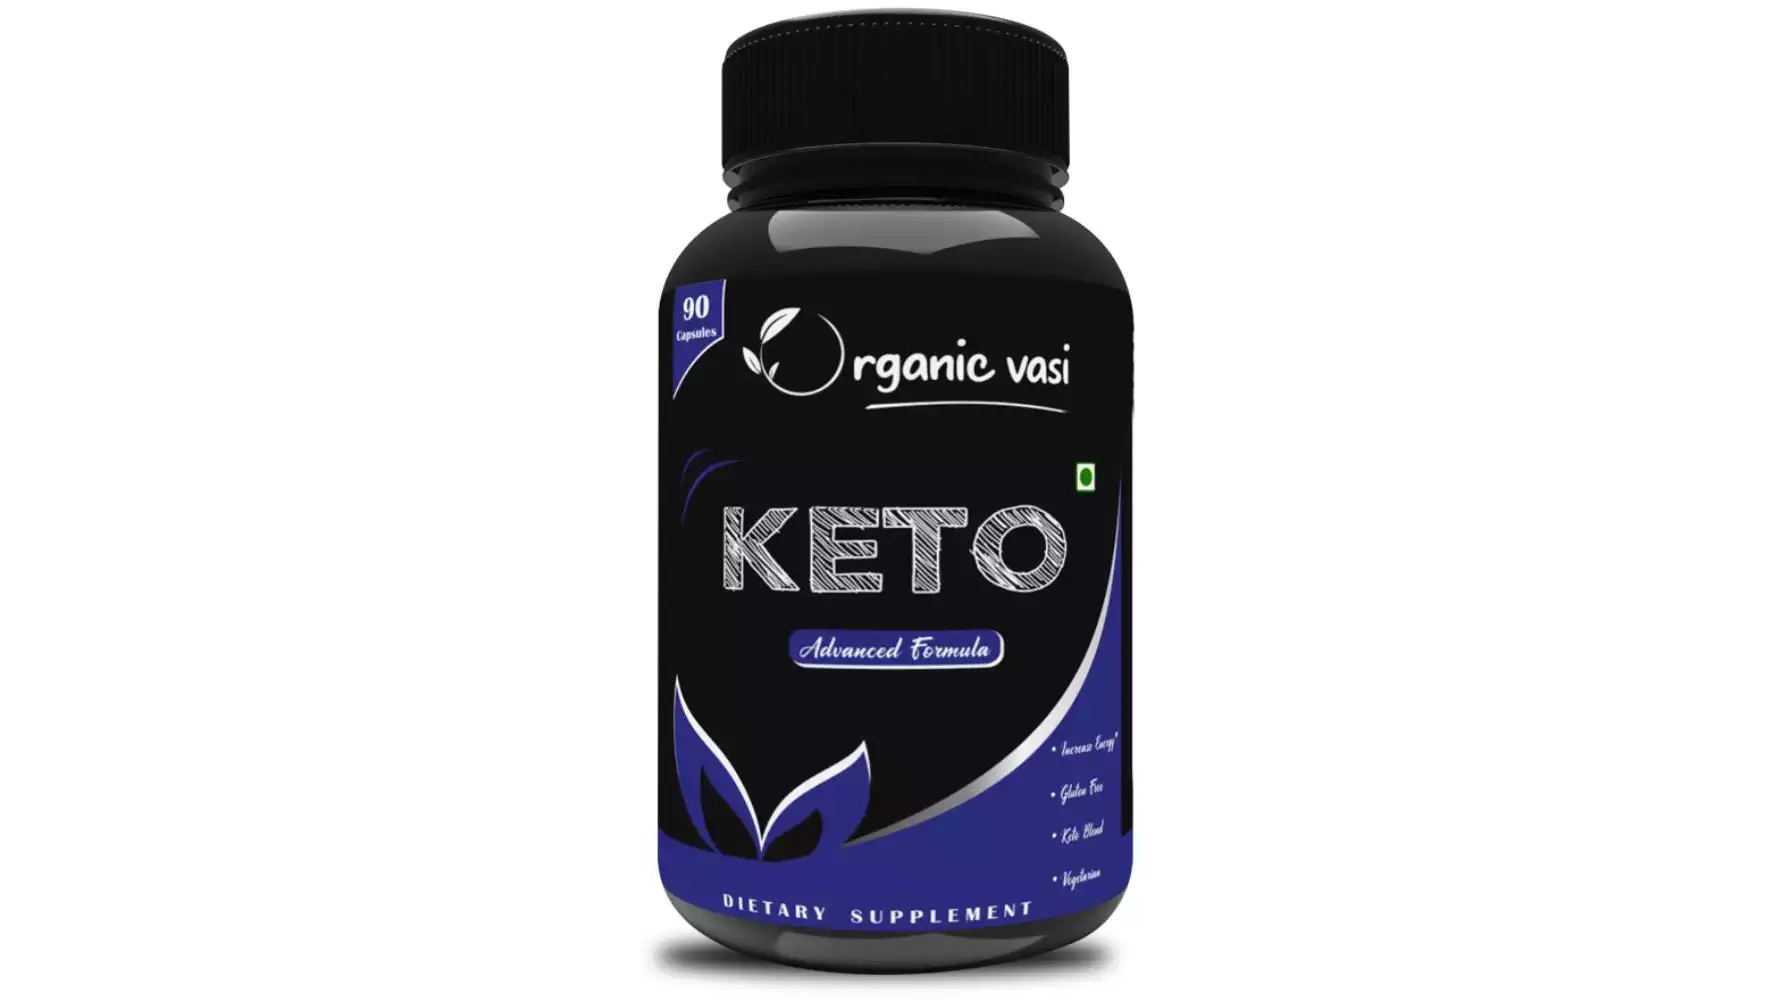 Organic Vasi Premium Keto 800Mg Supplement (90caps)